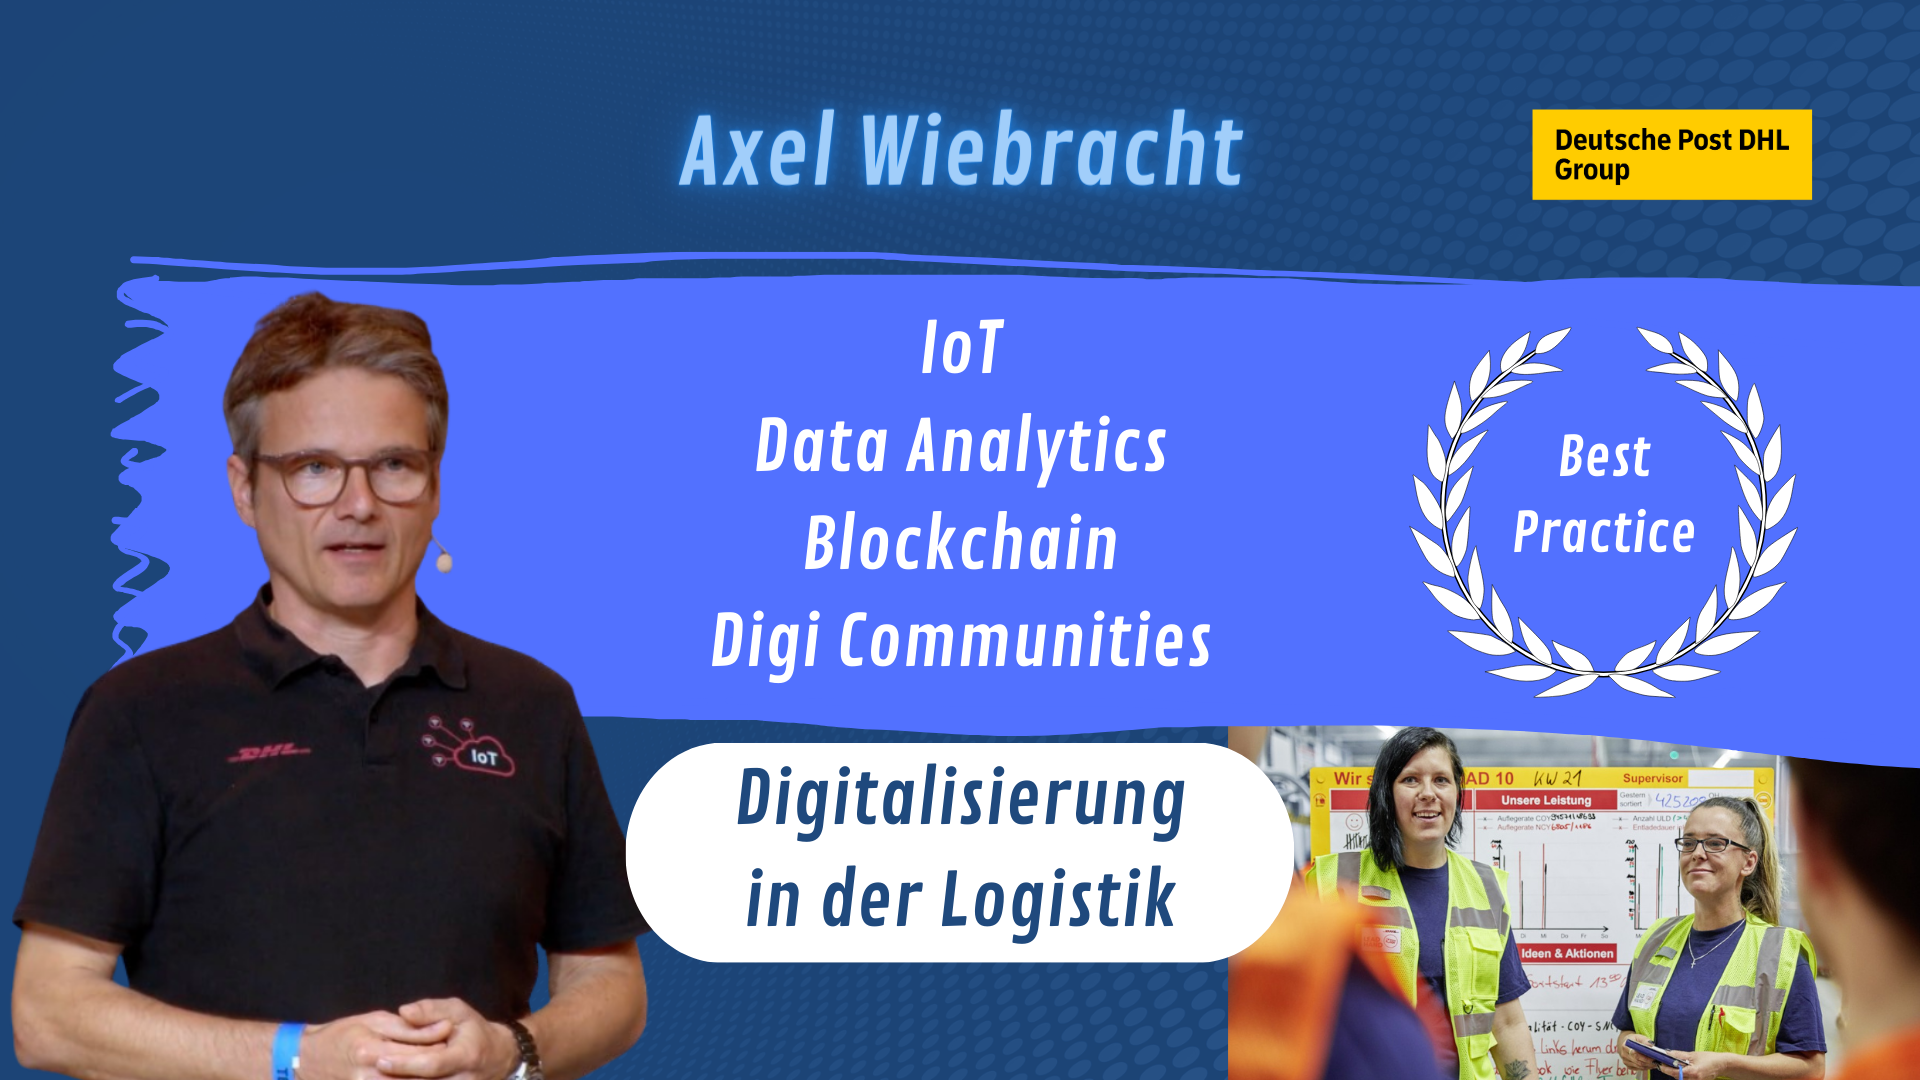 DIGITAL - Digitalization in logistics with Axel Wiebracht